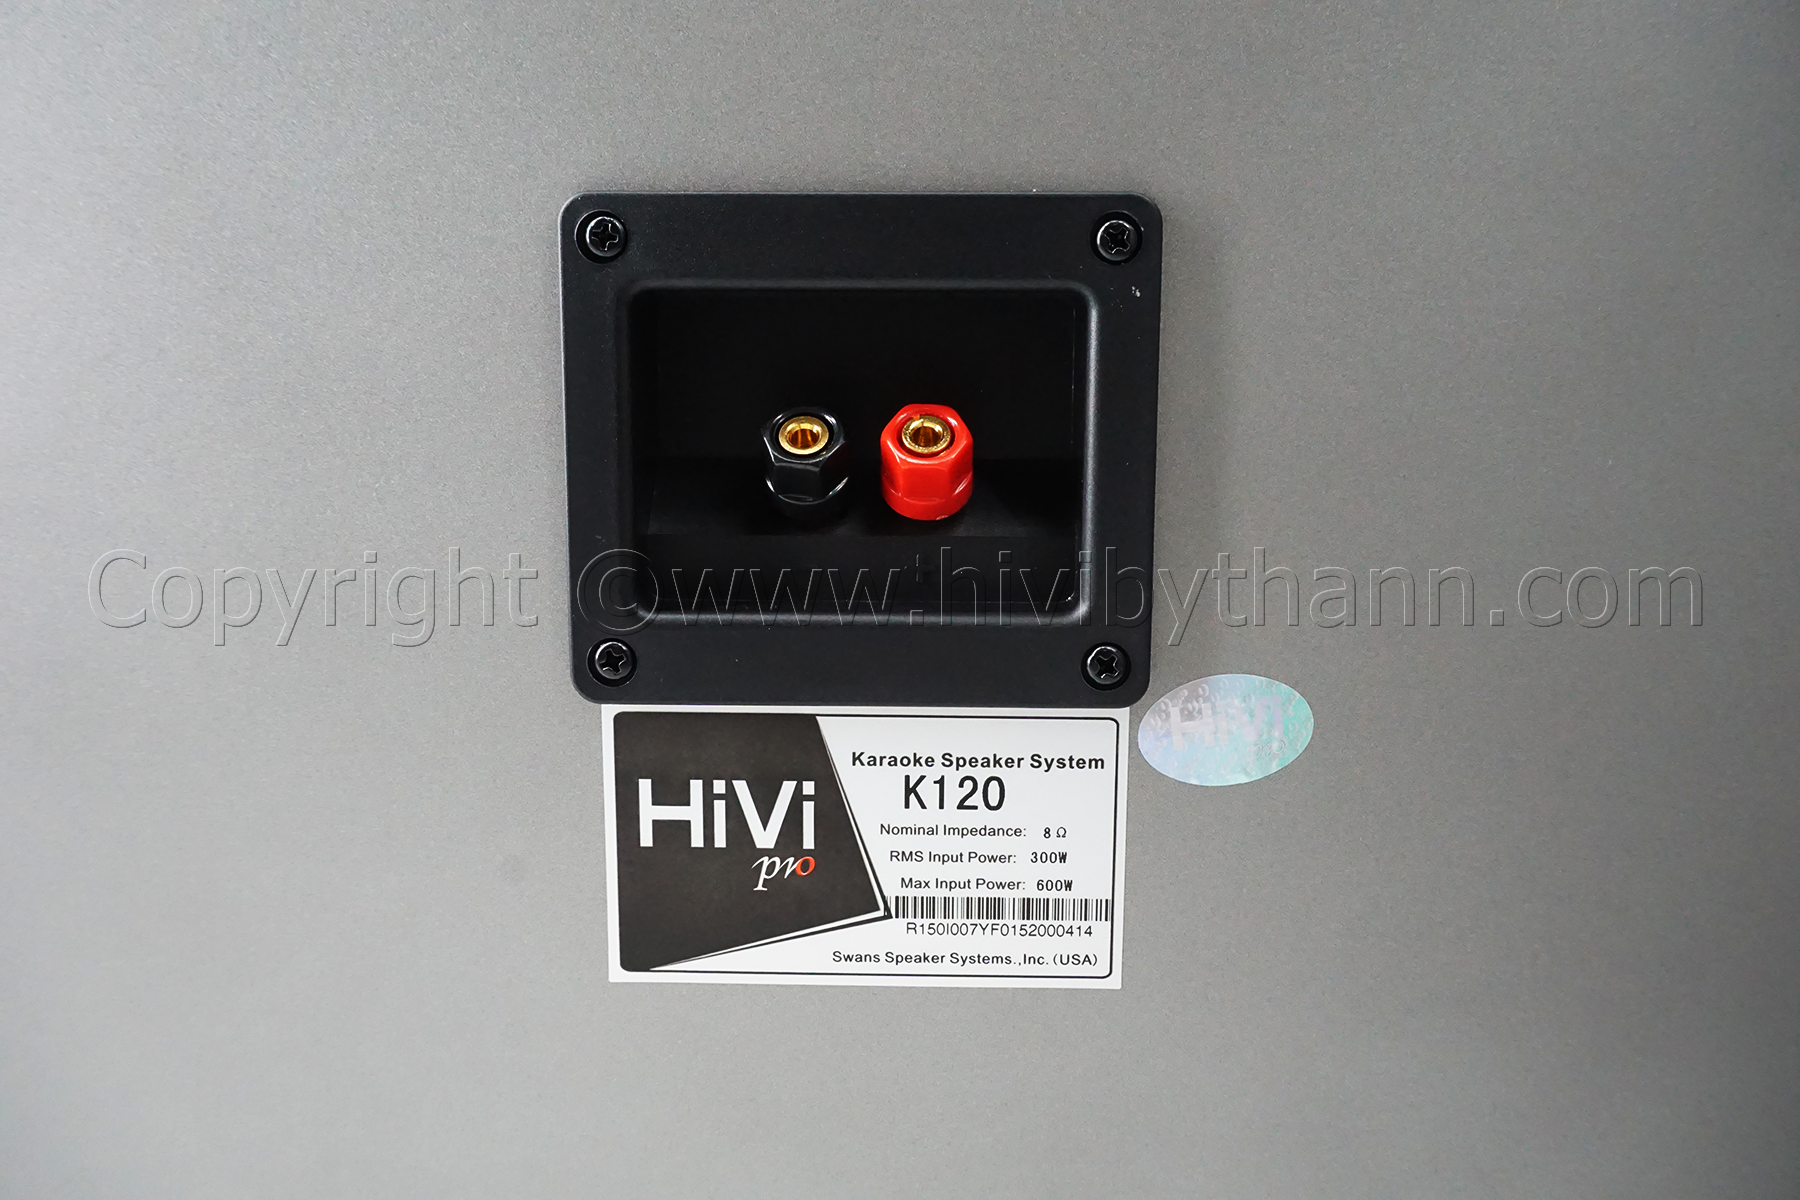 HiVi_K120_Product_7